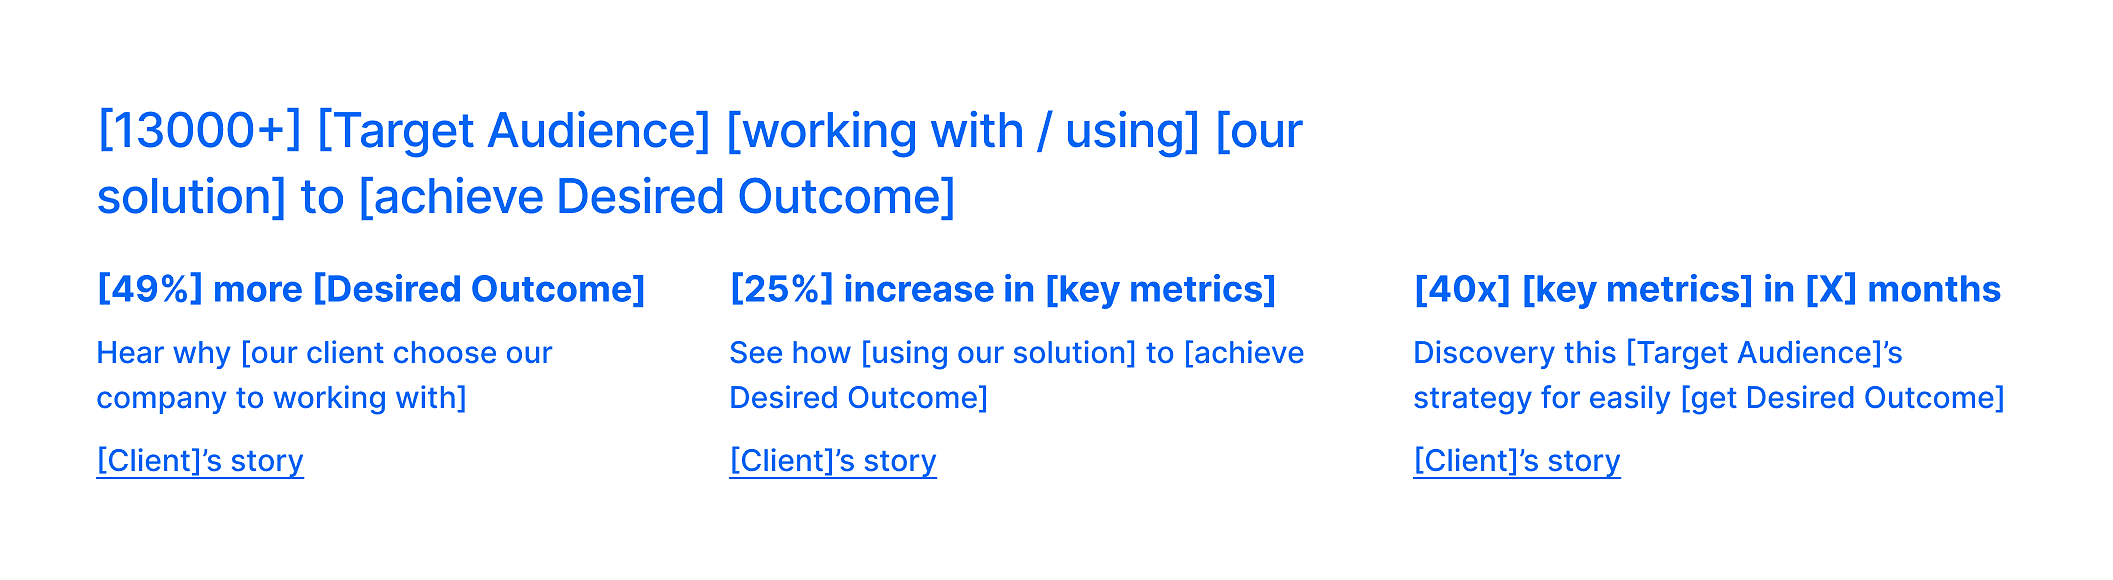 Blueprint of key metrics improve with case study